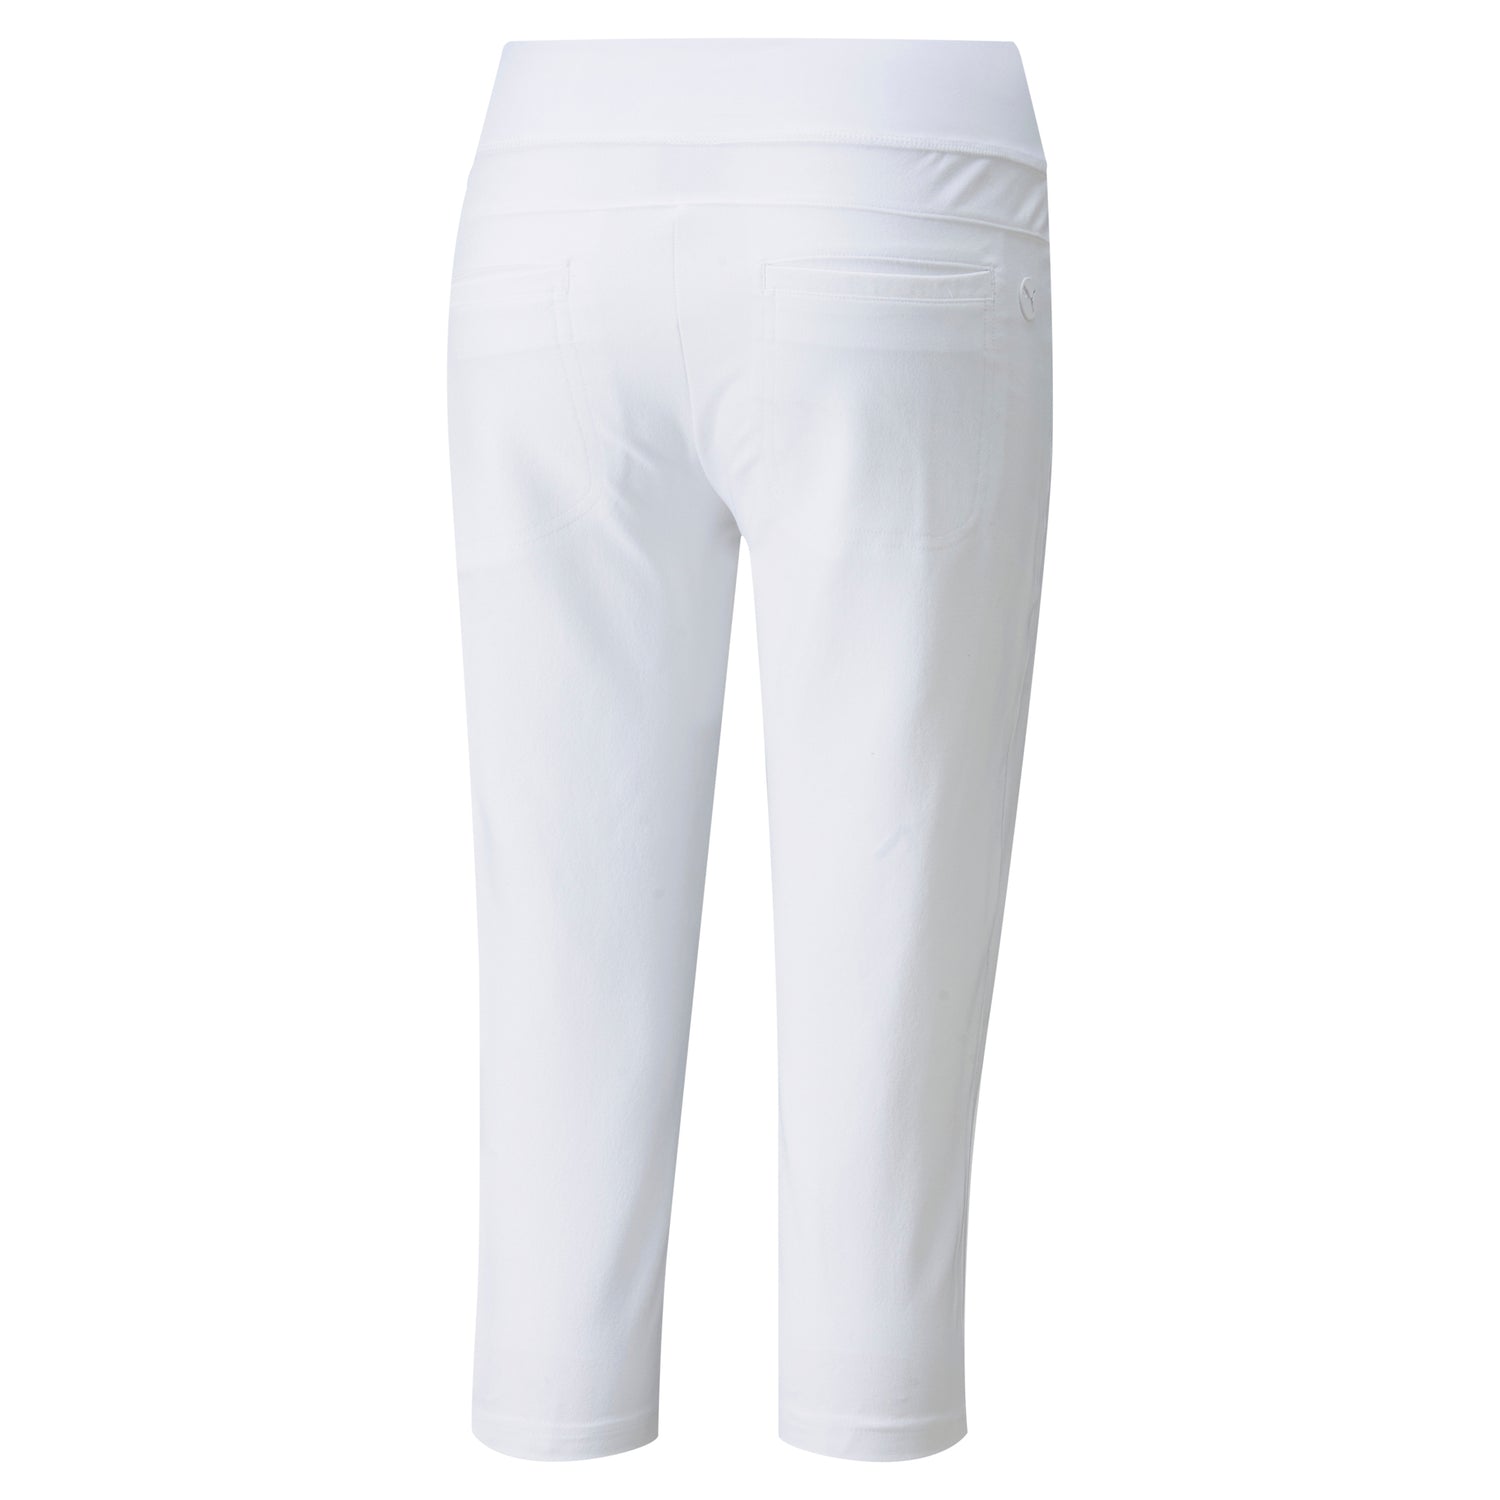 Lizgolf Kylie Golf Athletic Capri Pants Size 8 MSRP 59.00~~29 x 22